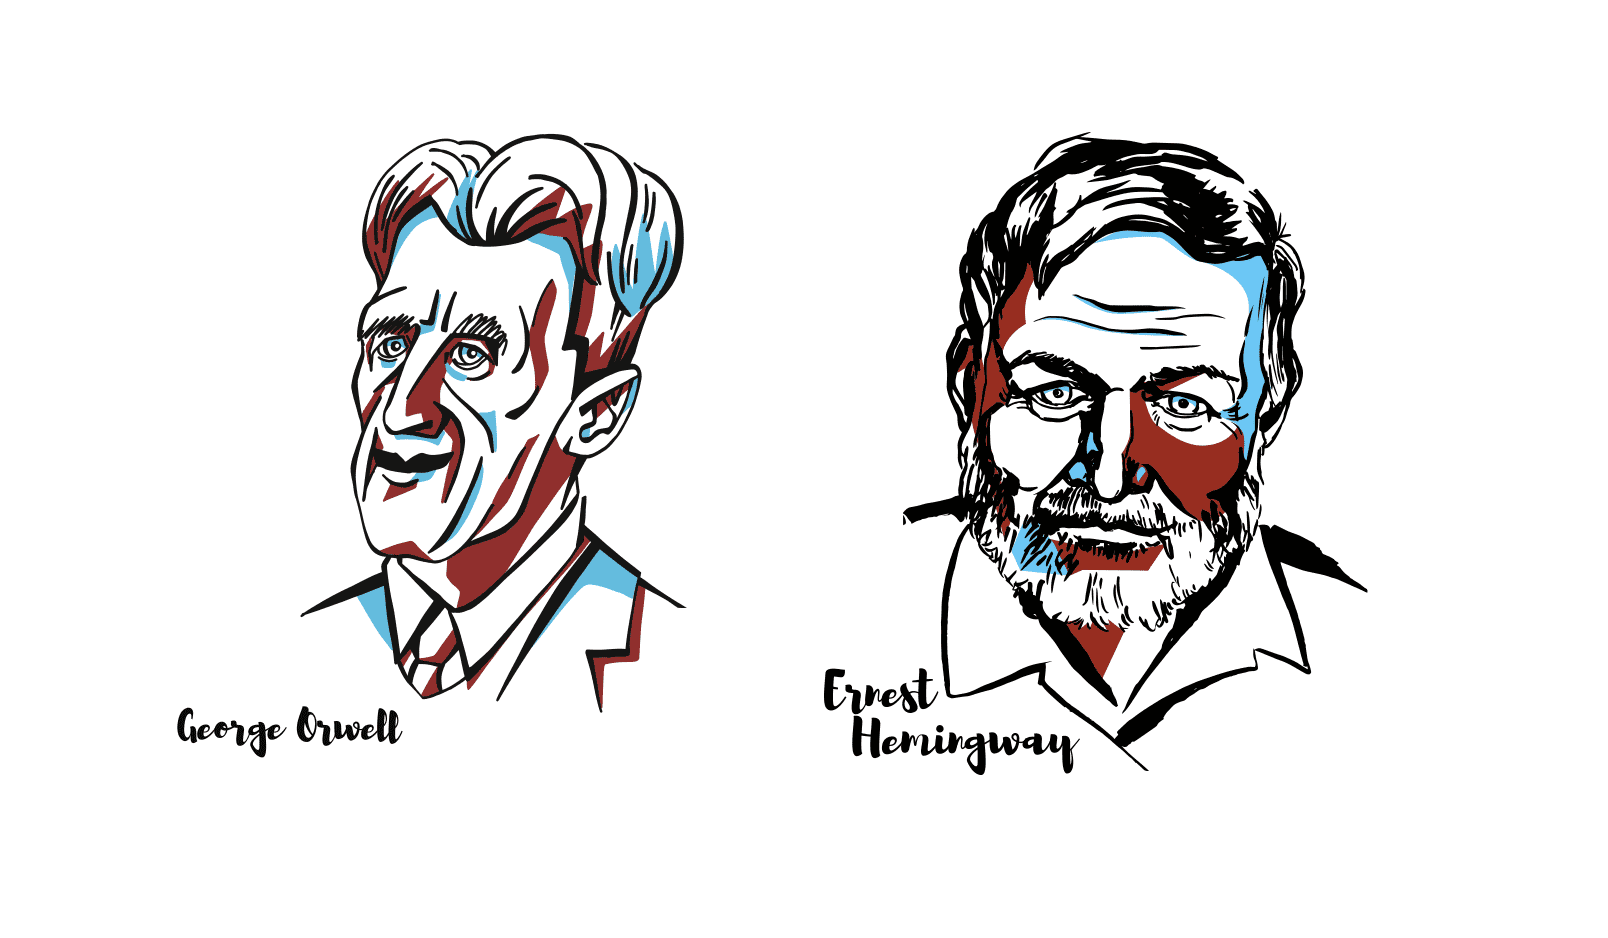 Hemingway and Orwell